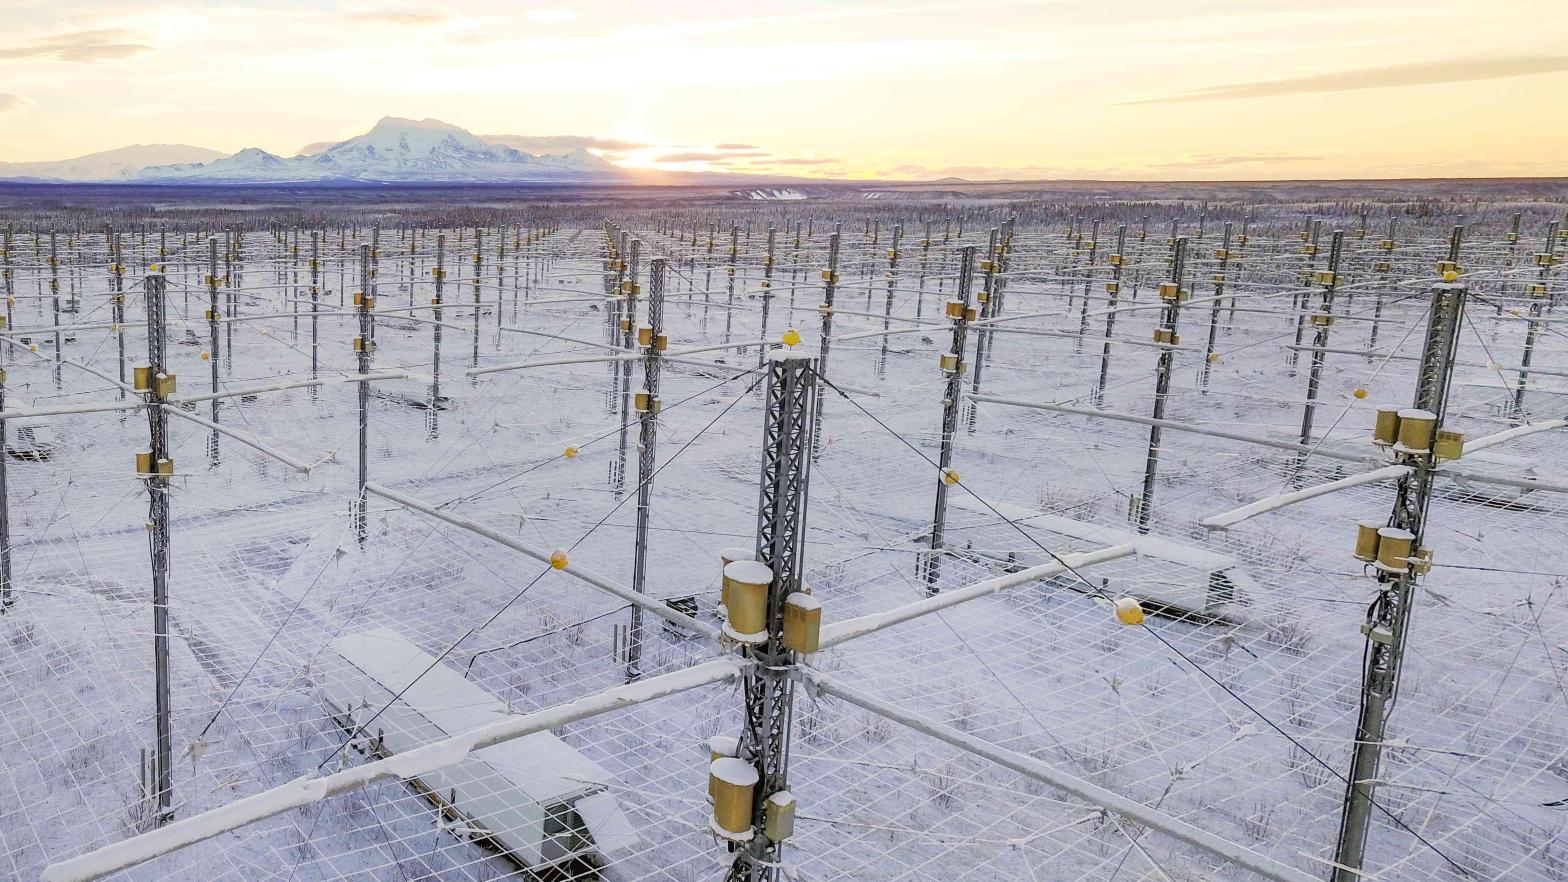 The HAARP facility's antenna array includes 180 antennas spread across 33 acres. (Photo: HAARP)